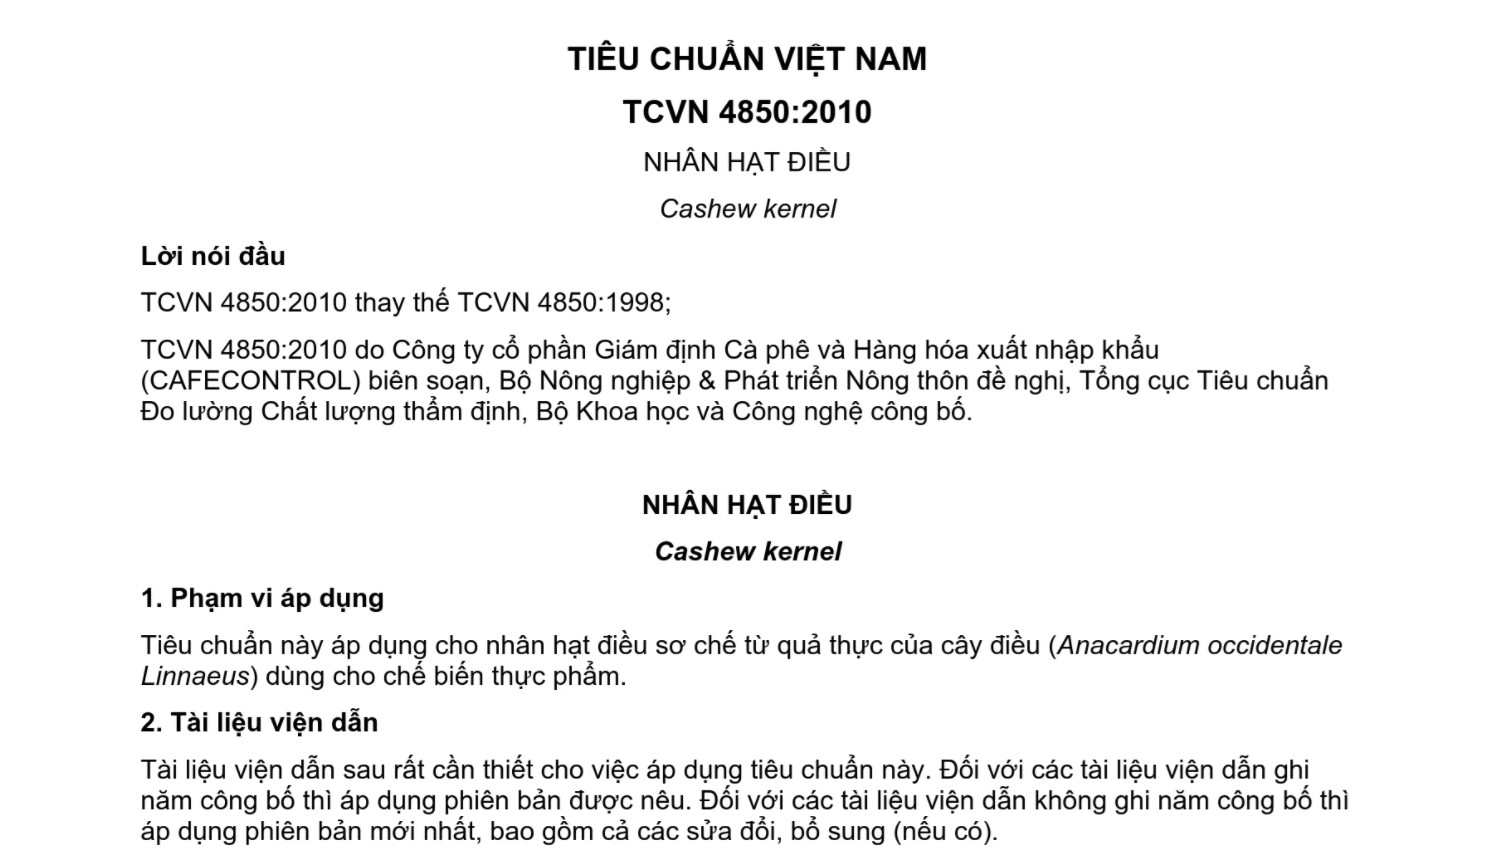 Standard TCVN 4850: 2010 – Vietnam cashew nuts kernel and technical request